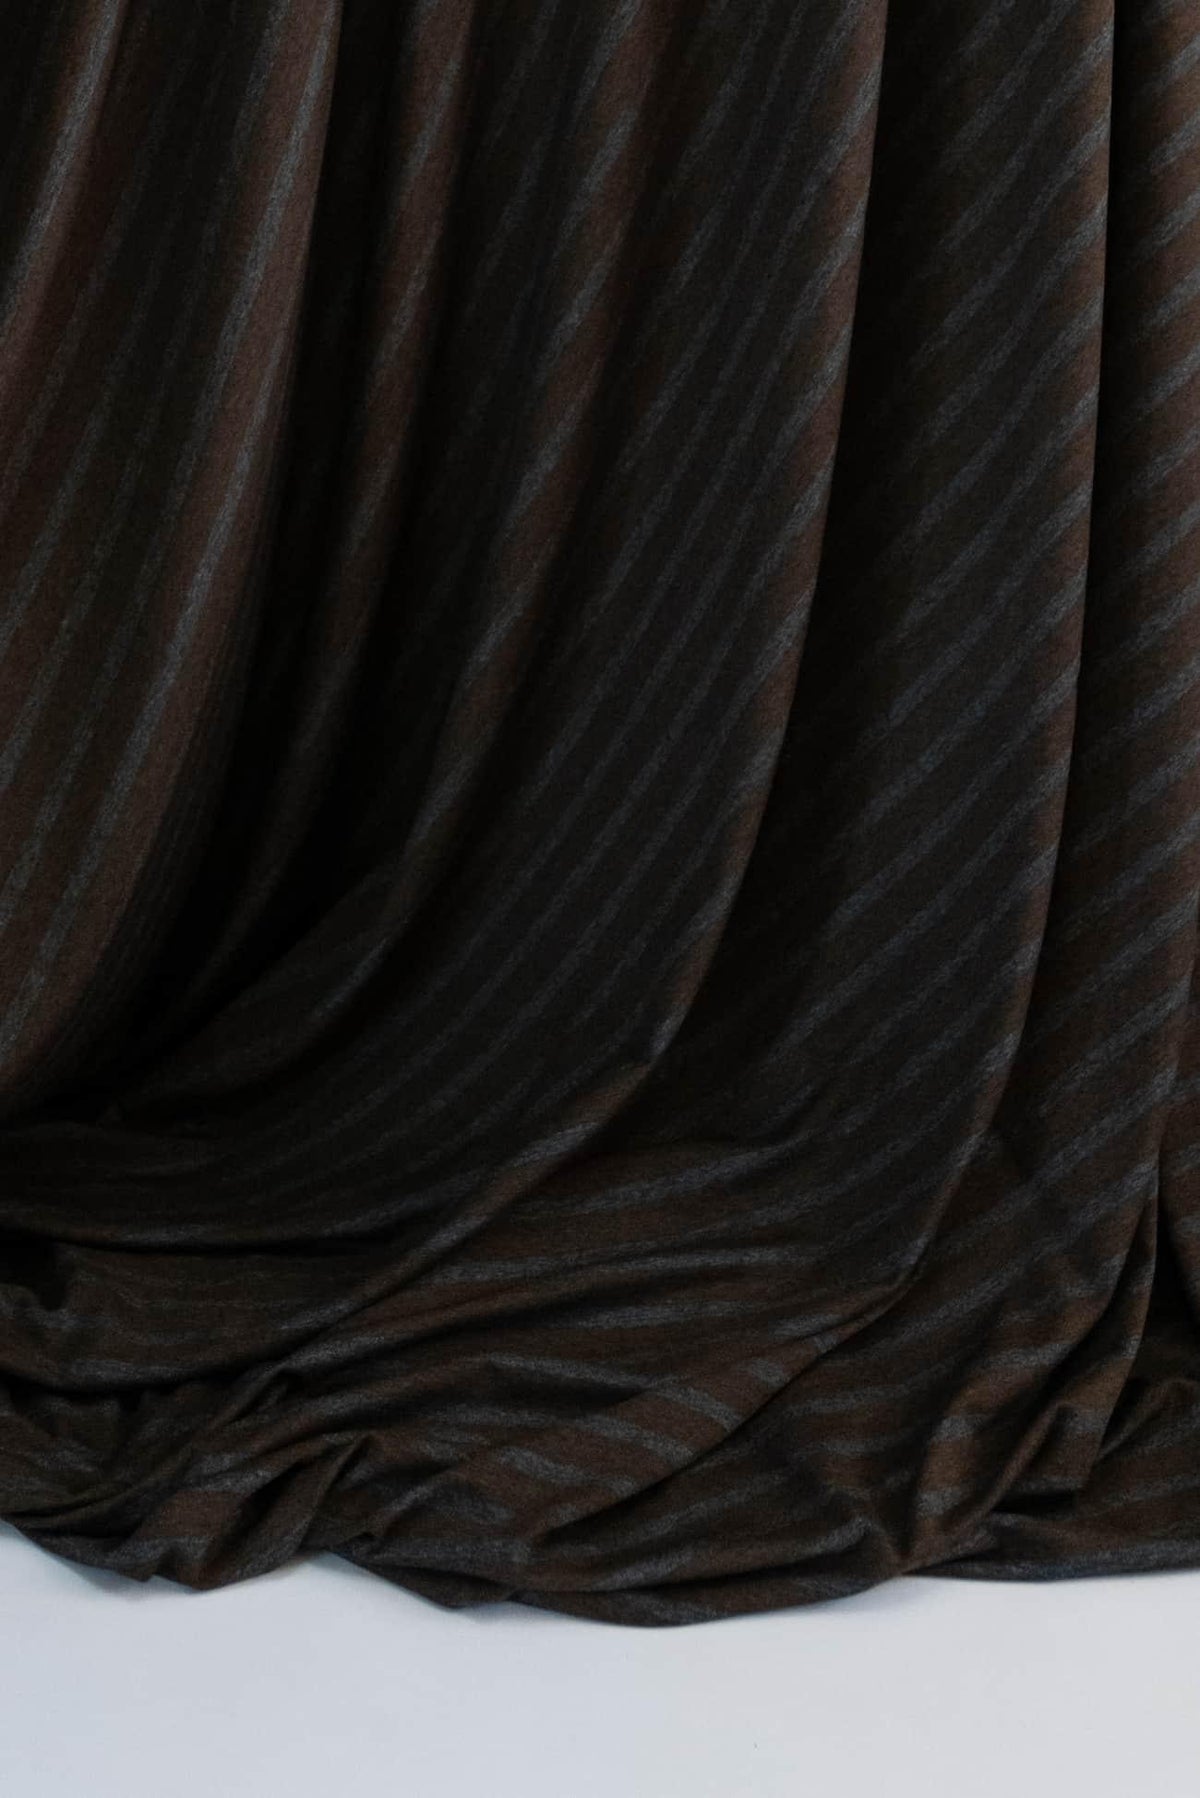 Count Basie Stripe USA Knit - Marcy Tilton Fabrics